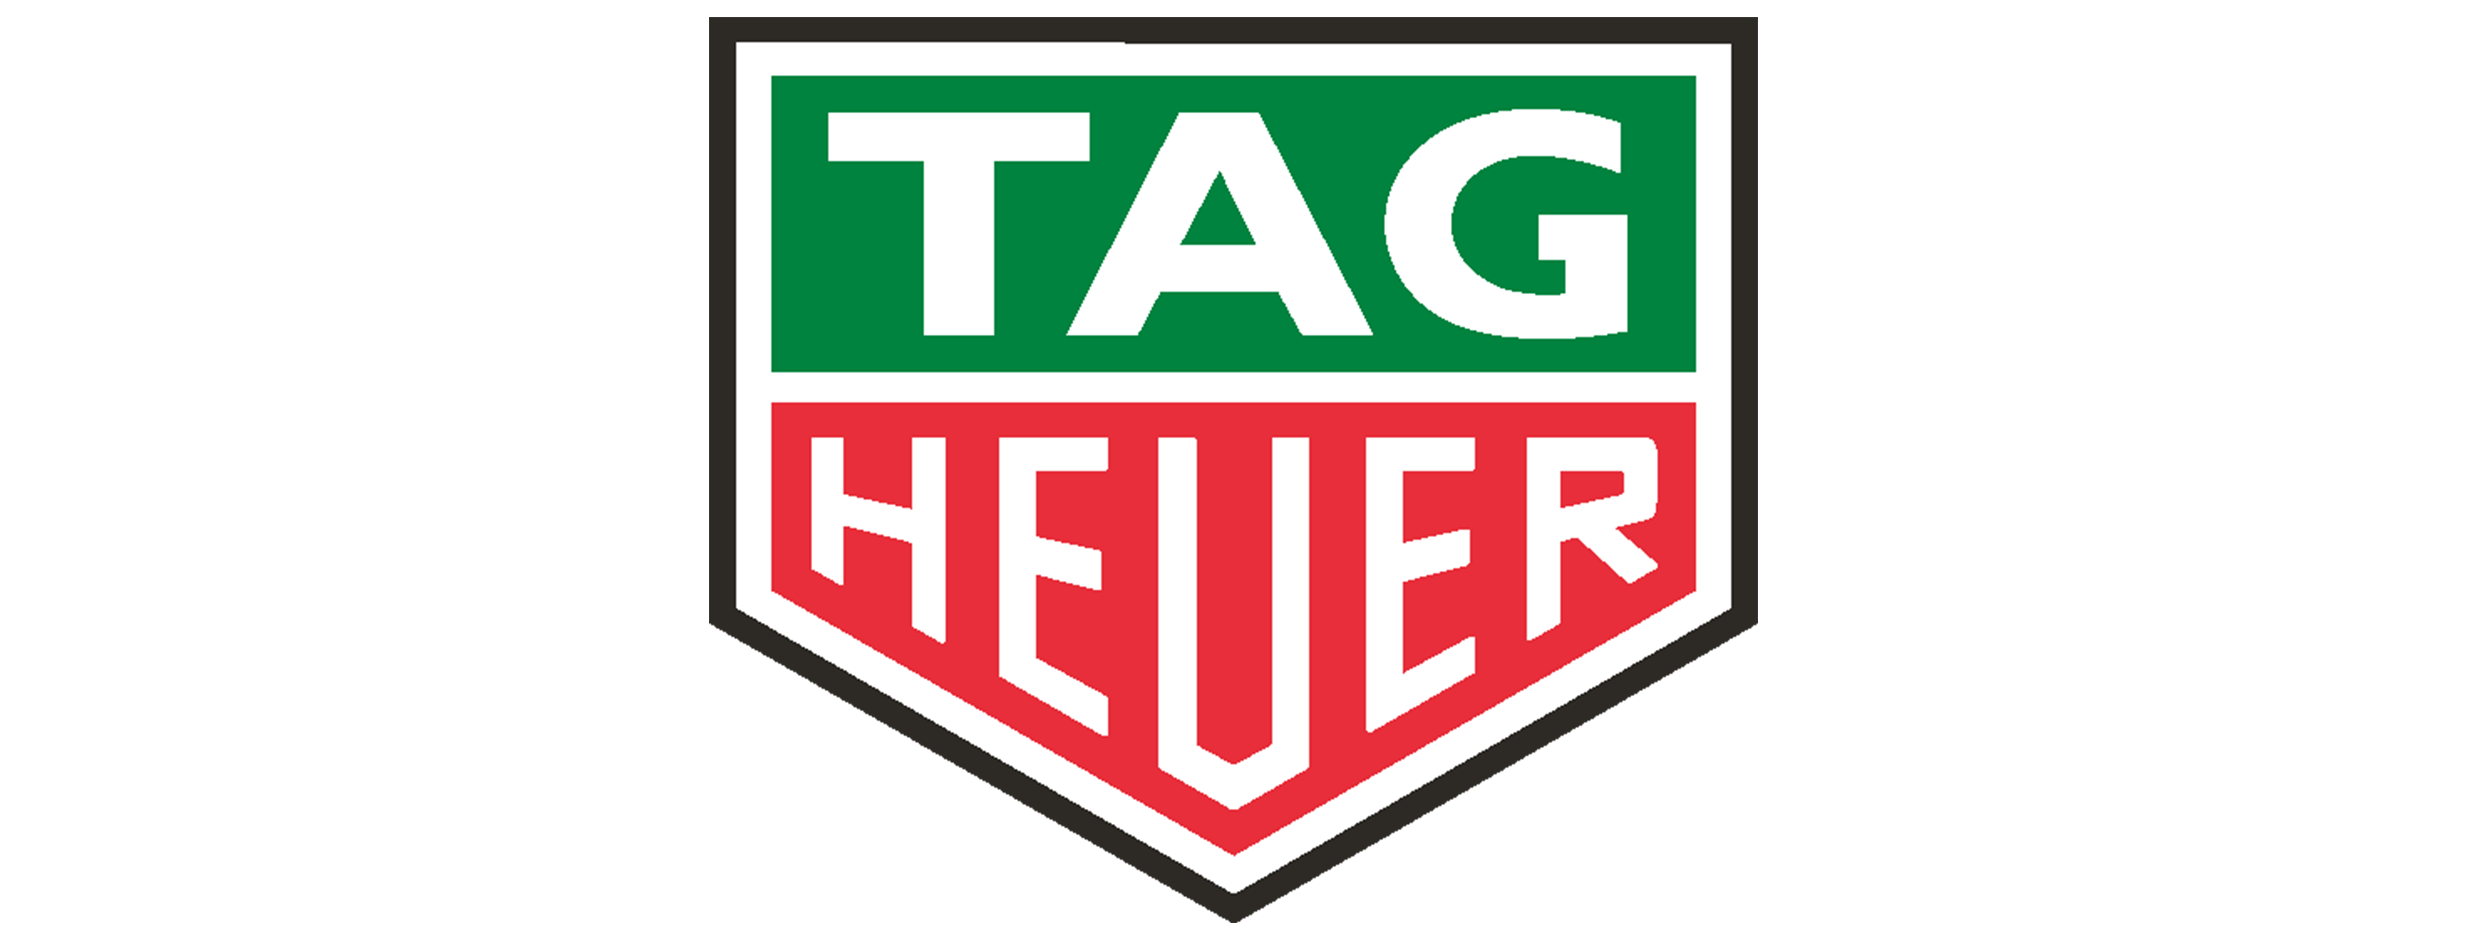 TAG Heuer Formula 1